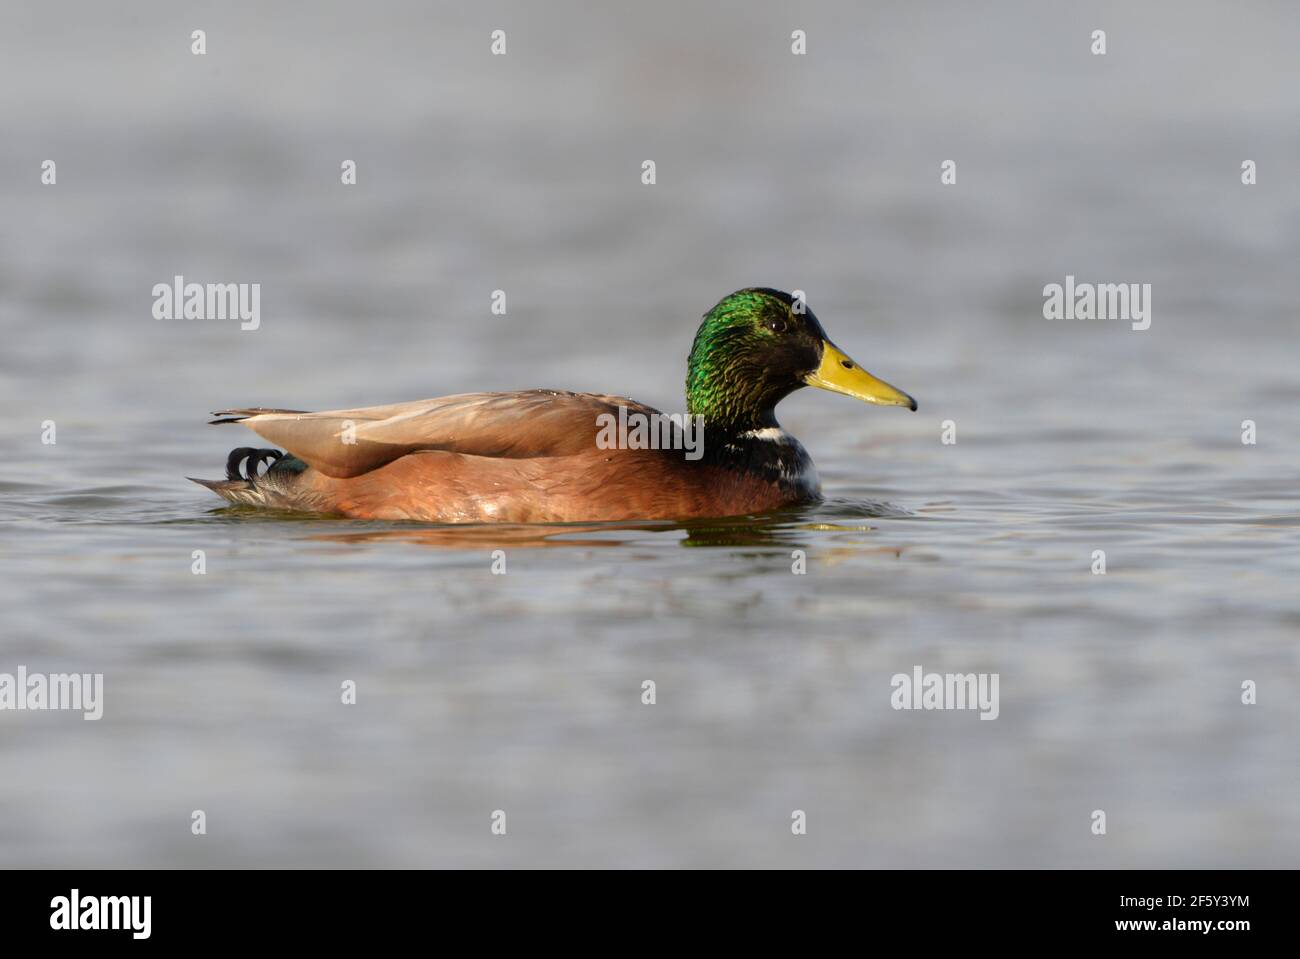 Mallard hybrid duck on pond with iridescent green head and yellow bill Stock Photo